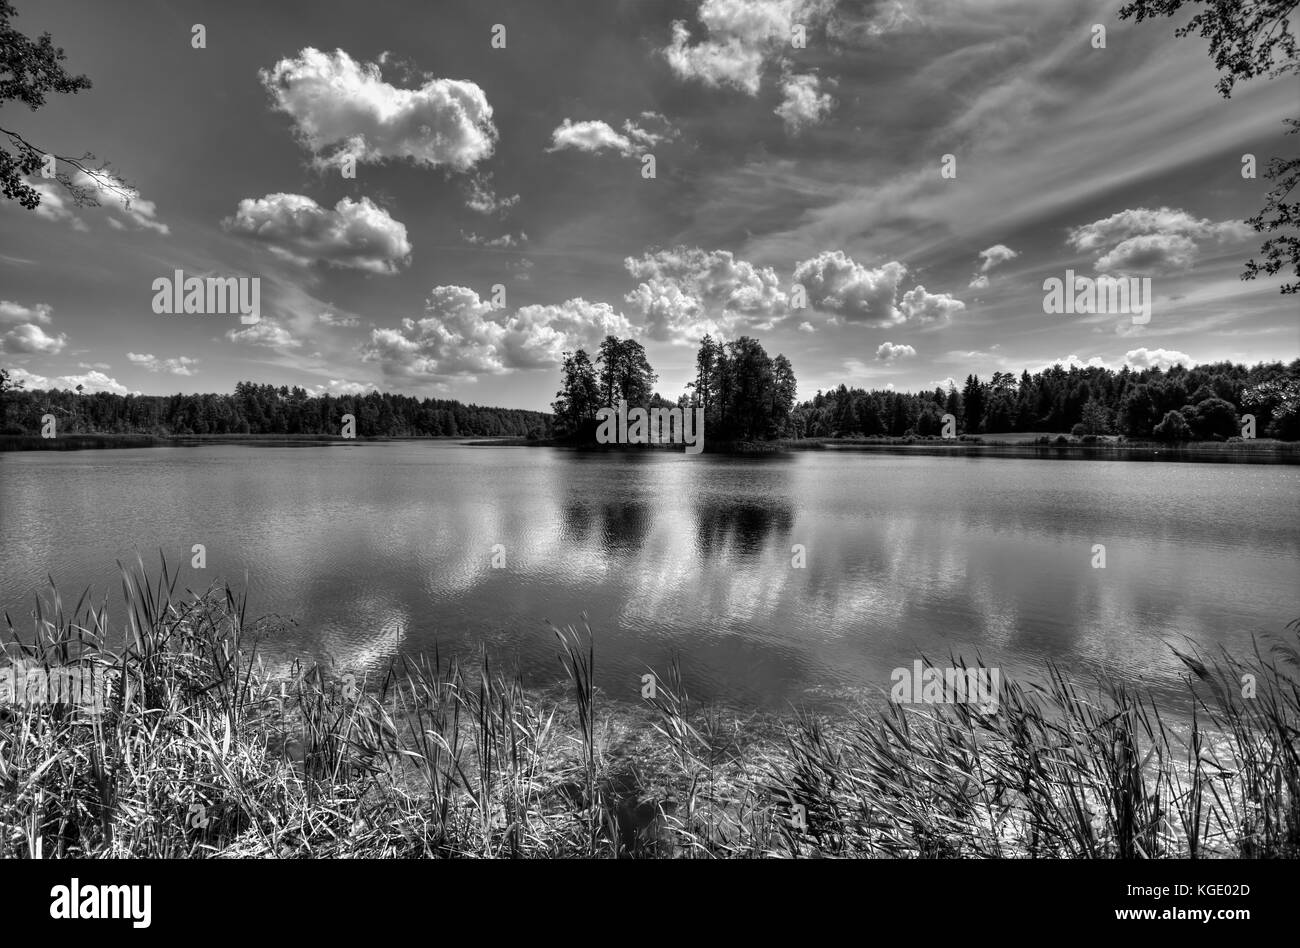 Komosa lake in Knyszynska forest, HDR black and white image Stock Photo